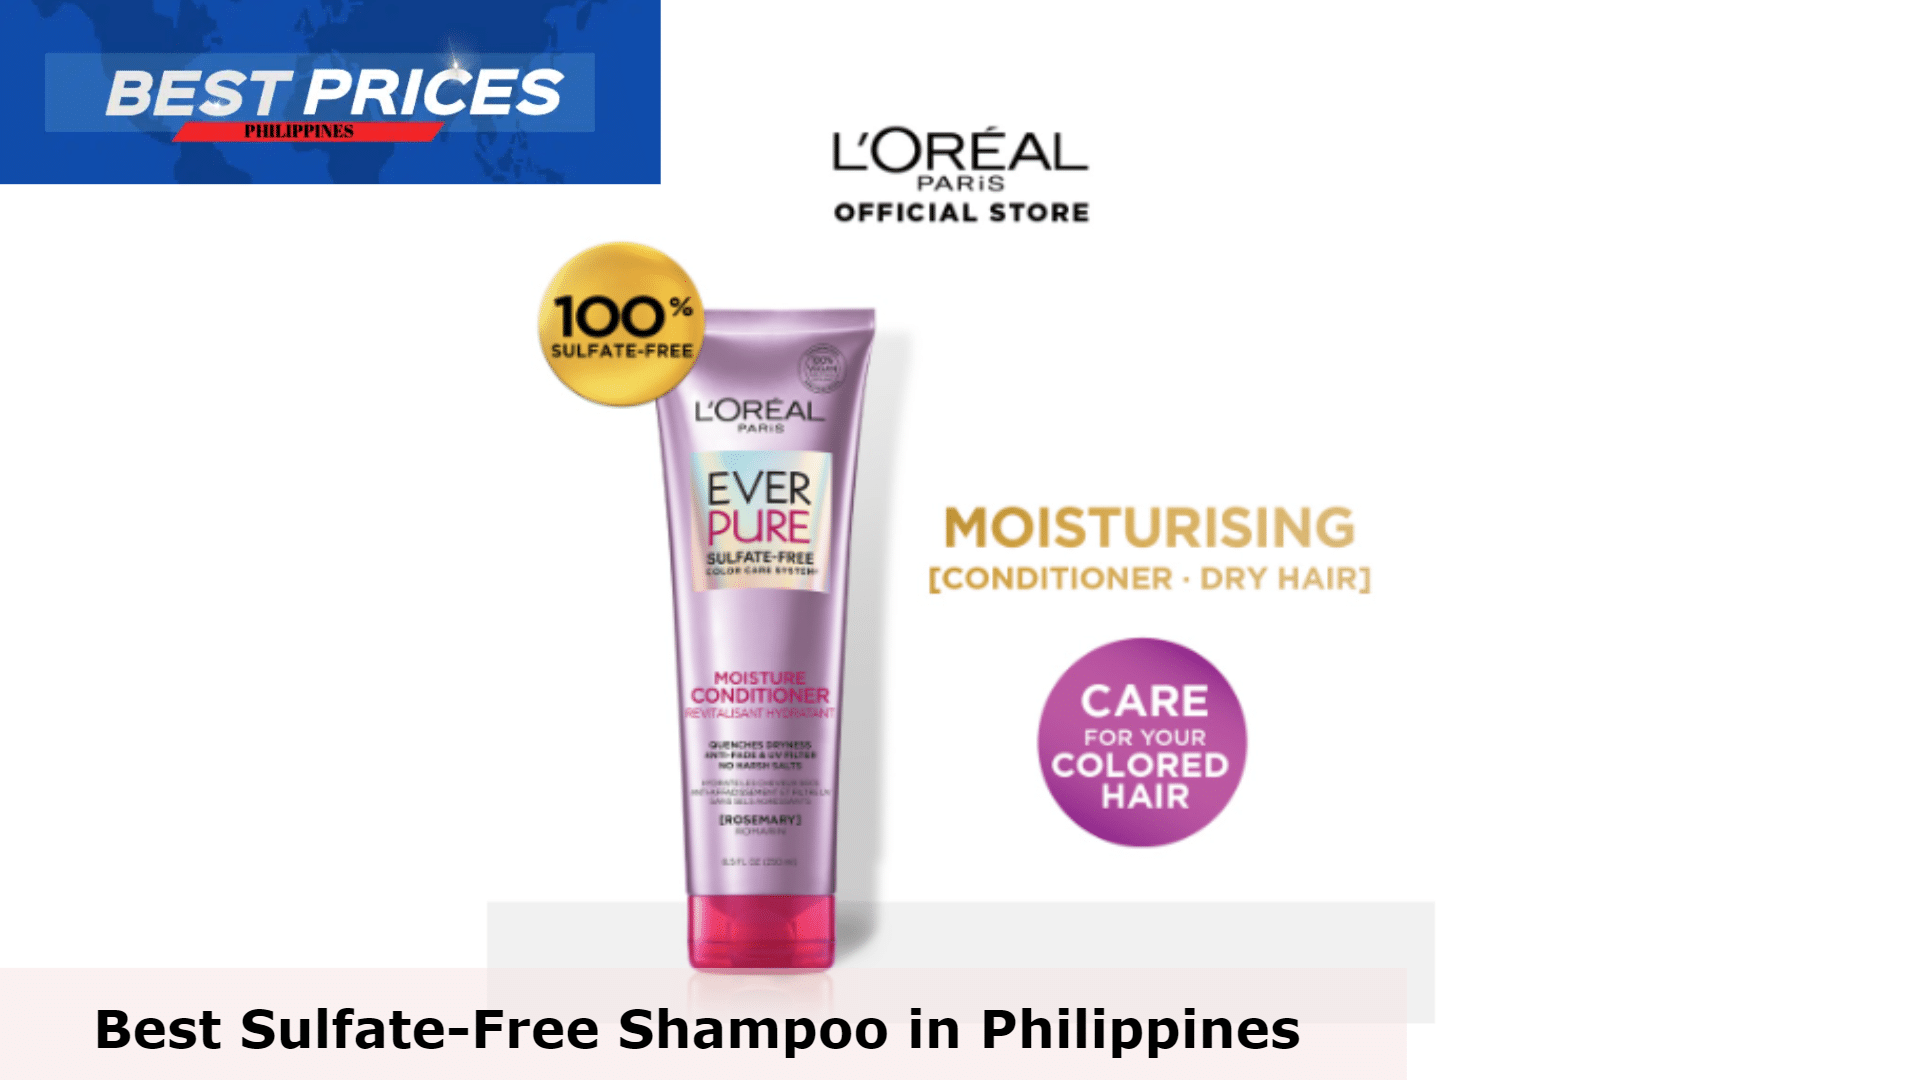 L'oréal EverPure Moisture Shampoo - Sulfate-Free Shampoo Philippines, Sulfate-Free Shampoo Philippines, Is sulfate-free shampoo good for your hair?, Which shampoo is sulphate free?, Do sulfates cause hairloss?, What does sulfate-free mean?, 
sulfate-free shampoo and conditioner, sulfate-free shampoo drugstore, sulfate-free shampoo and conditioner for colored hair, best sulfate-free shampoo drugstore, sulfate-free shampoo for curly hair, best sulfate-free shampoo and conditioner, sulfate-free shampoo for oily hair, sulfate-free shampoo for botox treated hair, sulfate-free shampoo philippines for hair loss,